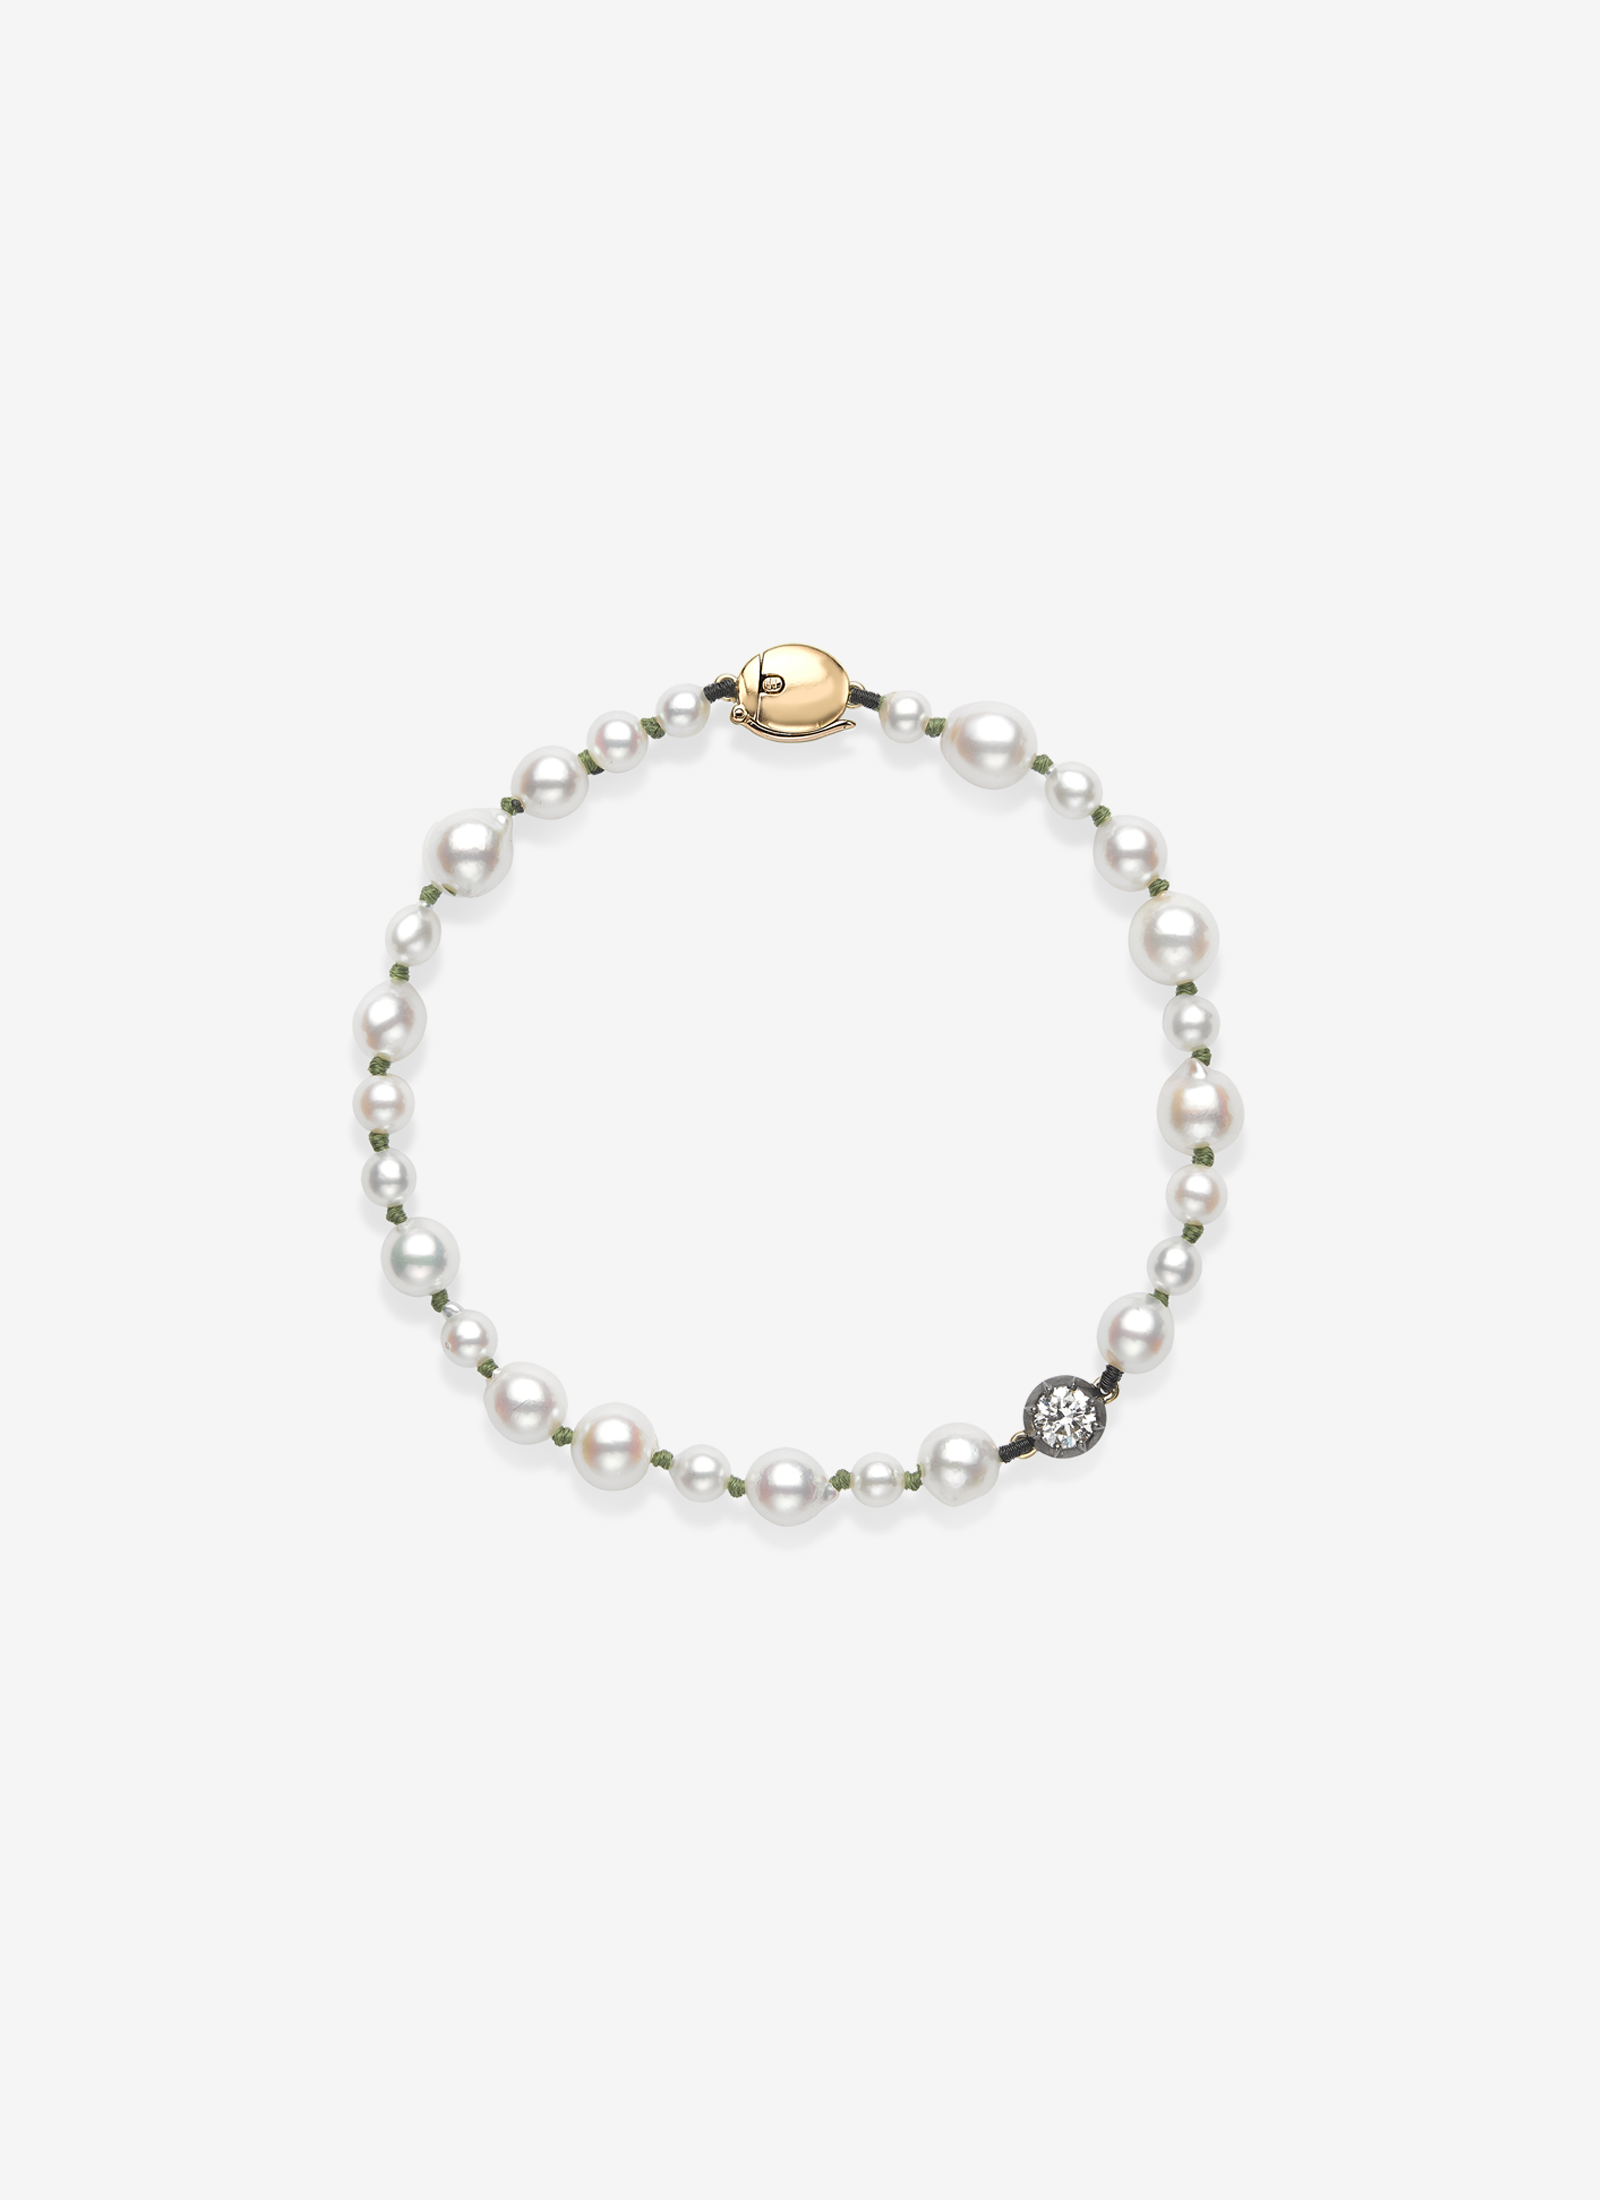 Beaches Pearl Bracelet - 18K Gold Bracelet with 0.40ct diamond & pearls